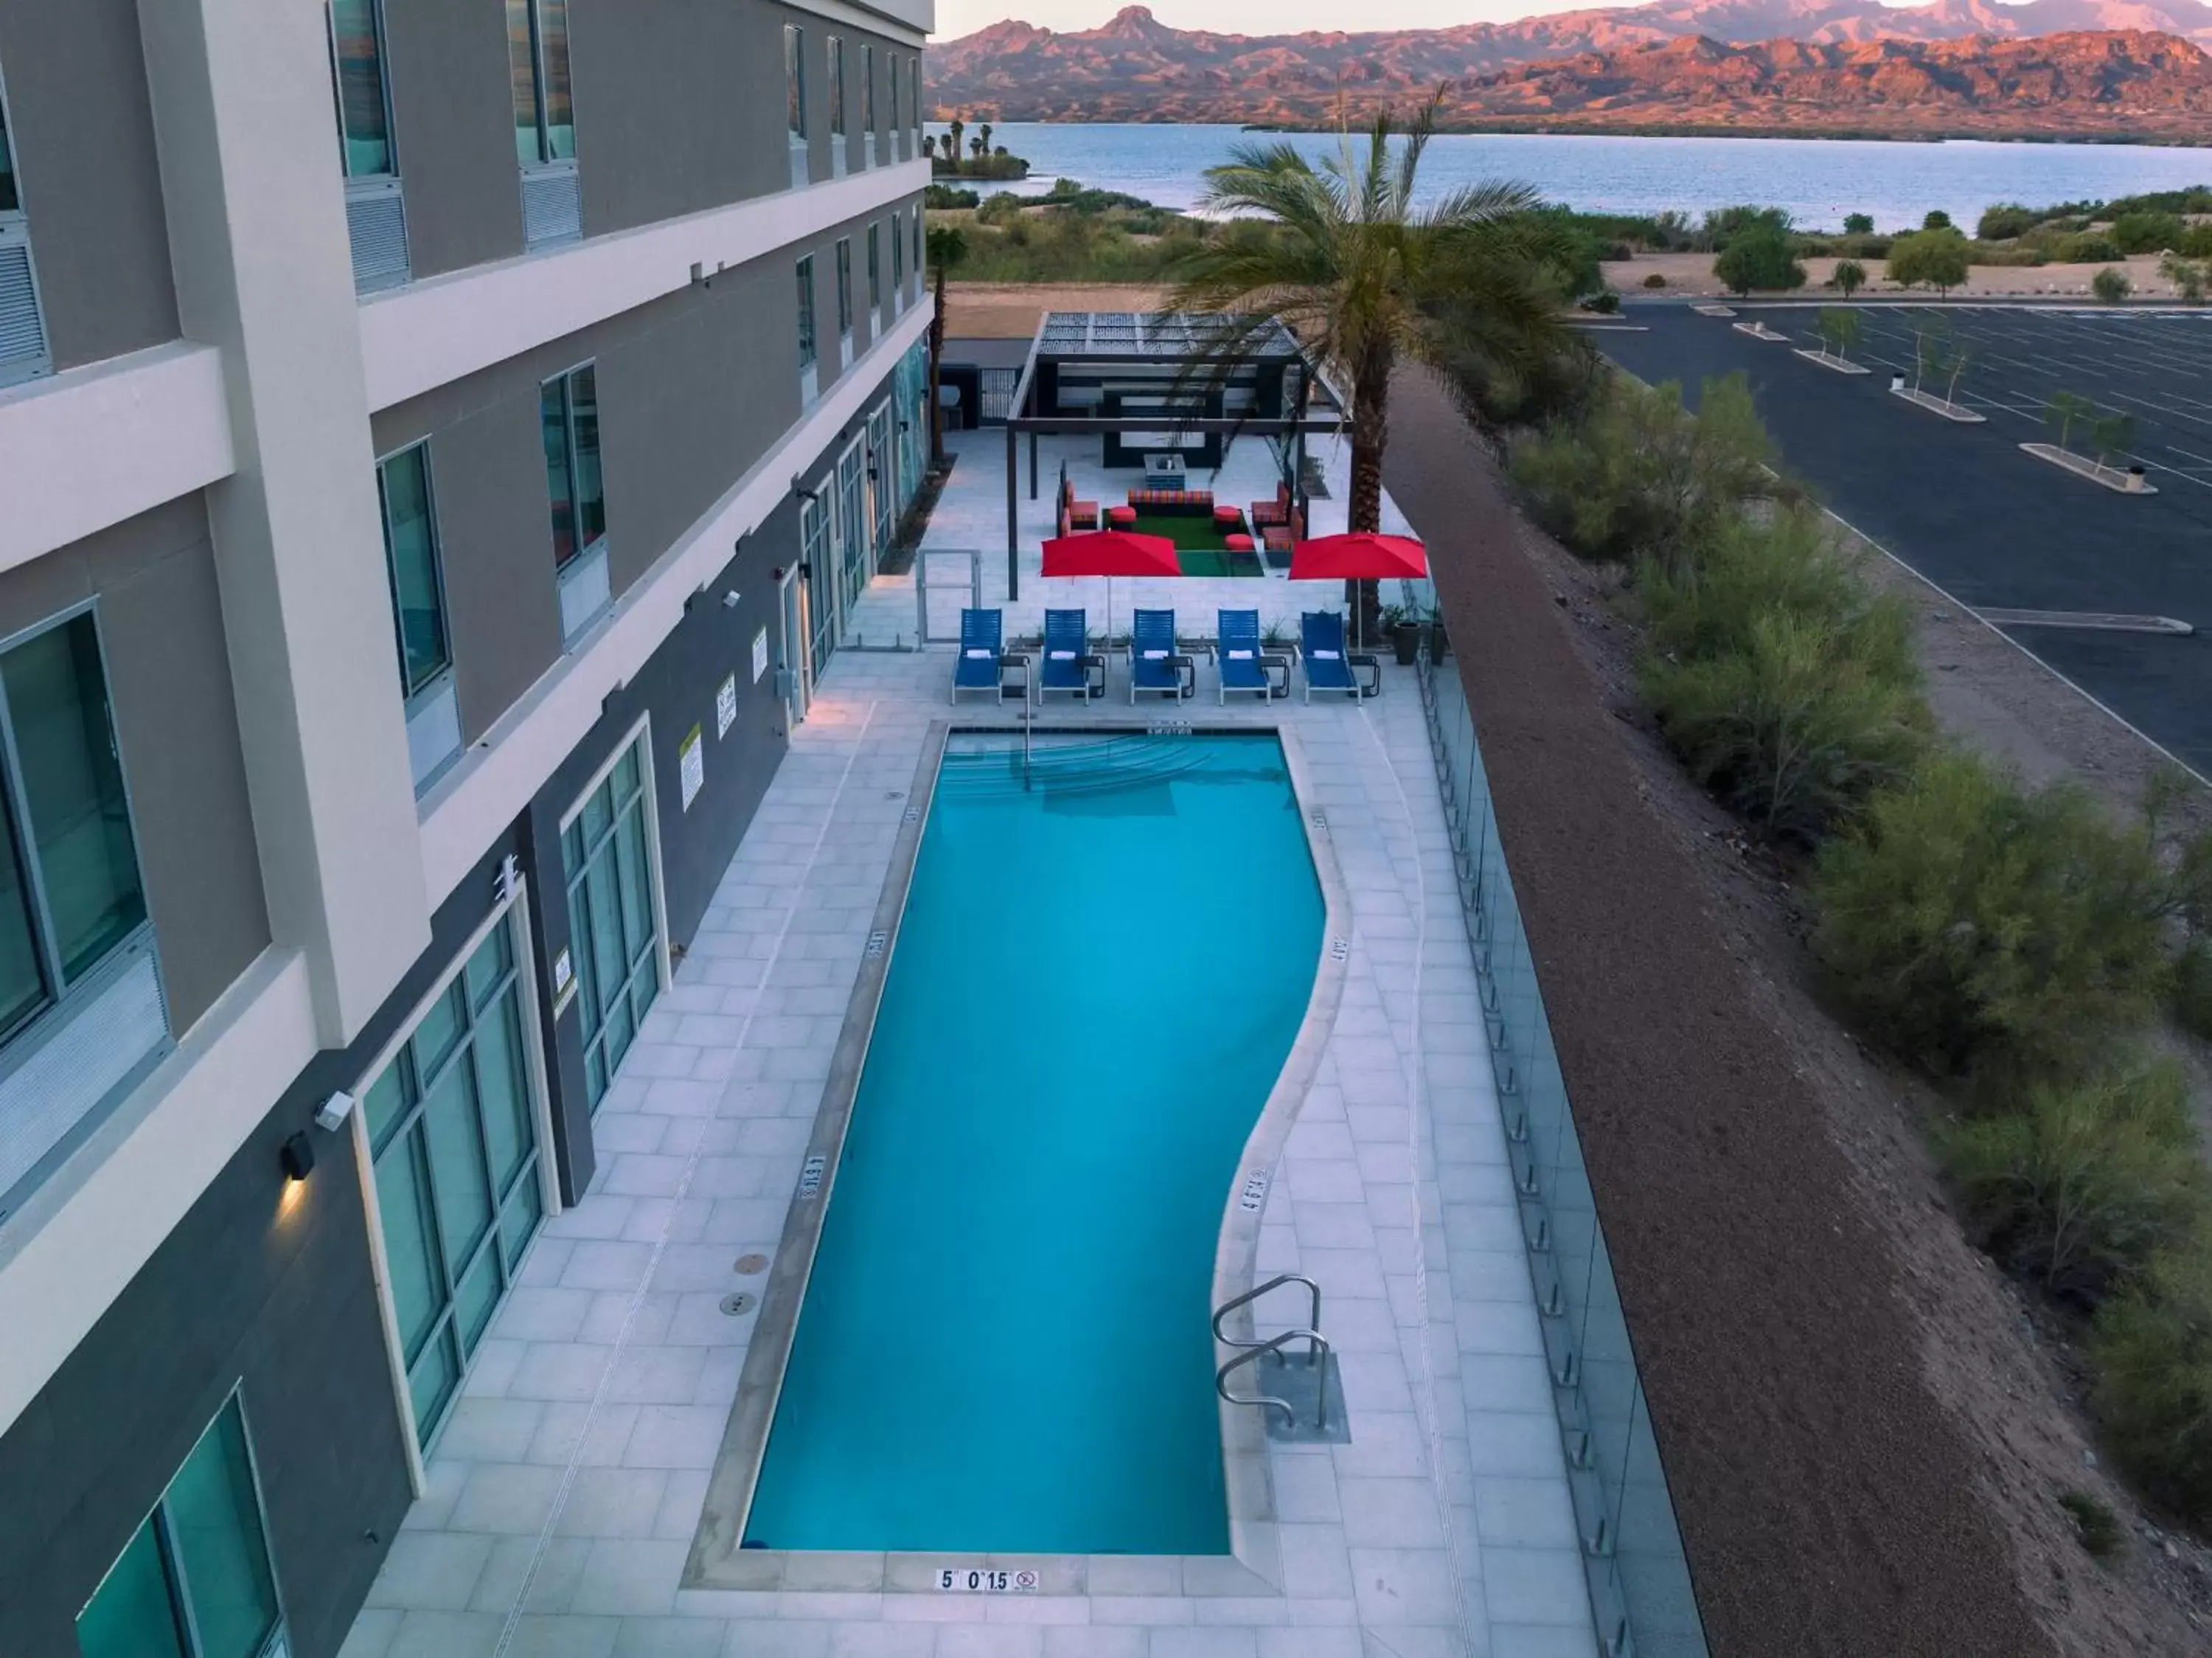 Patio, Pool View in Home2 Suites By Hilton Lake Havasu City